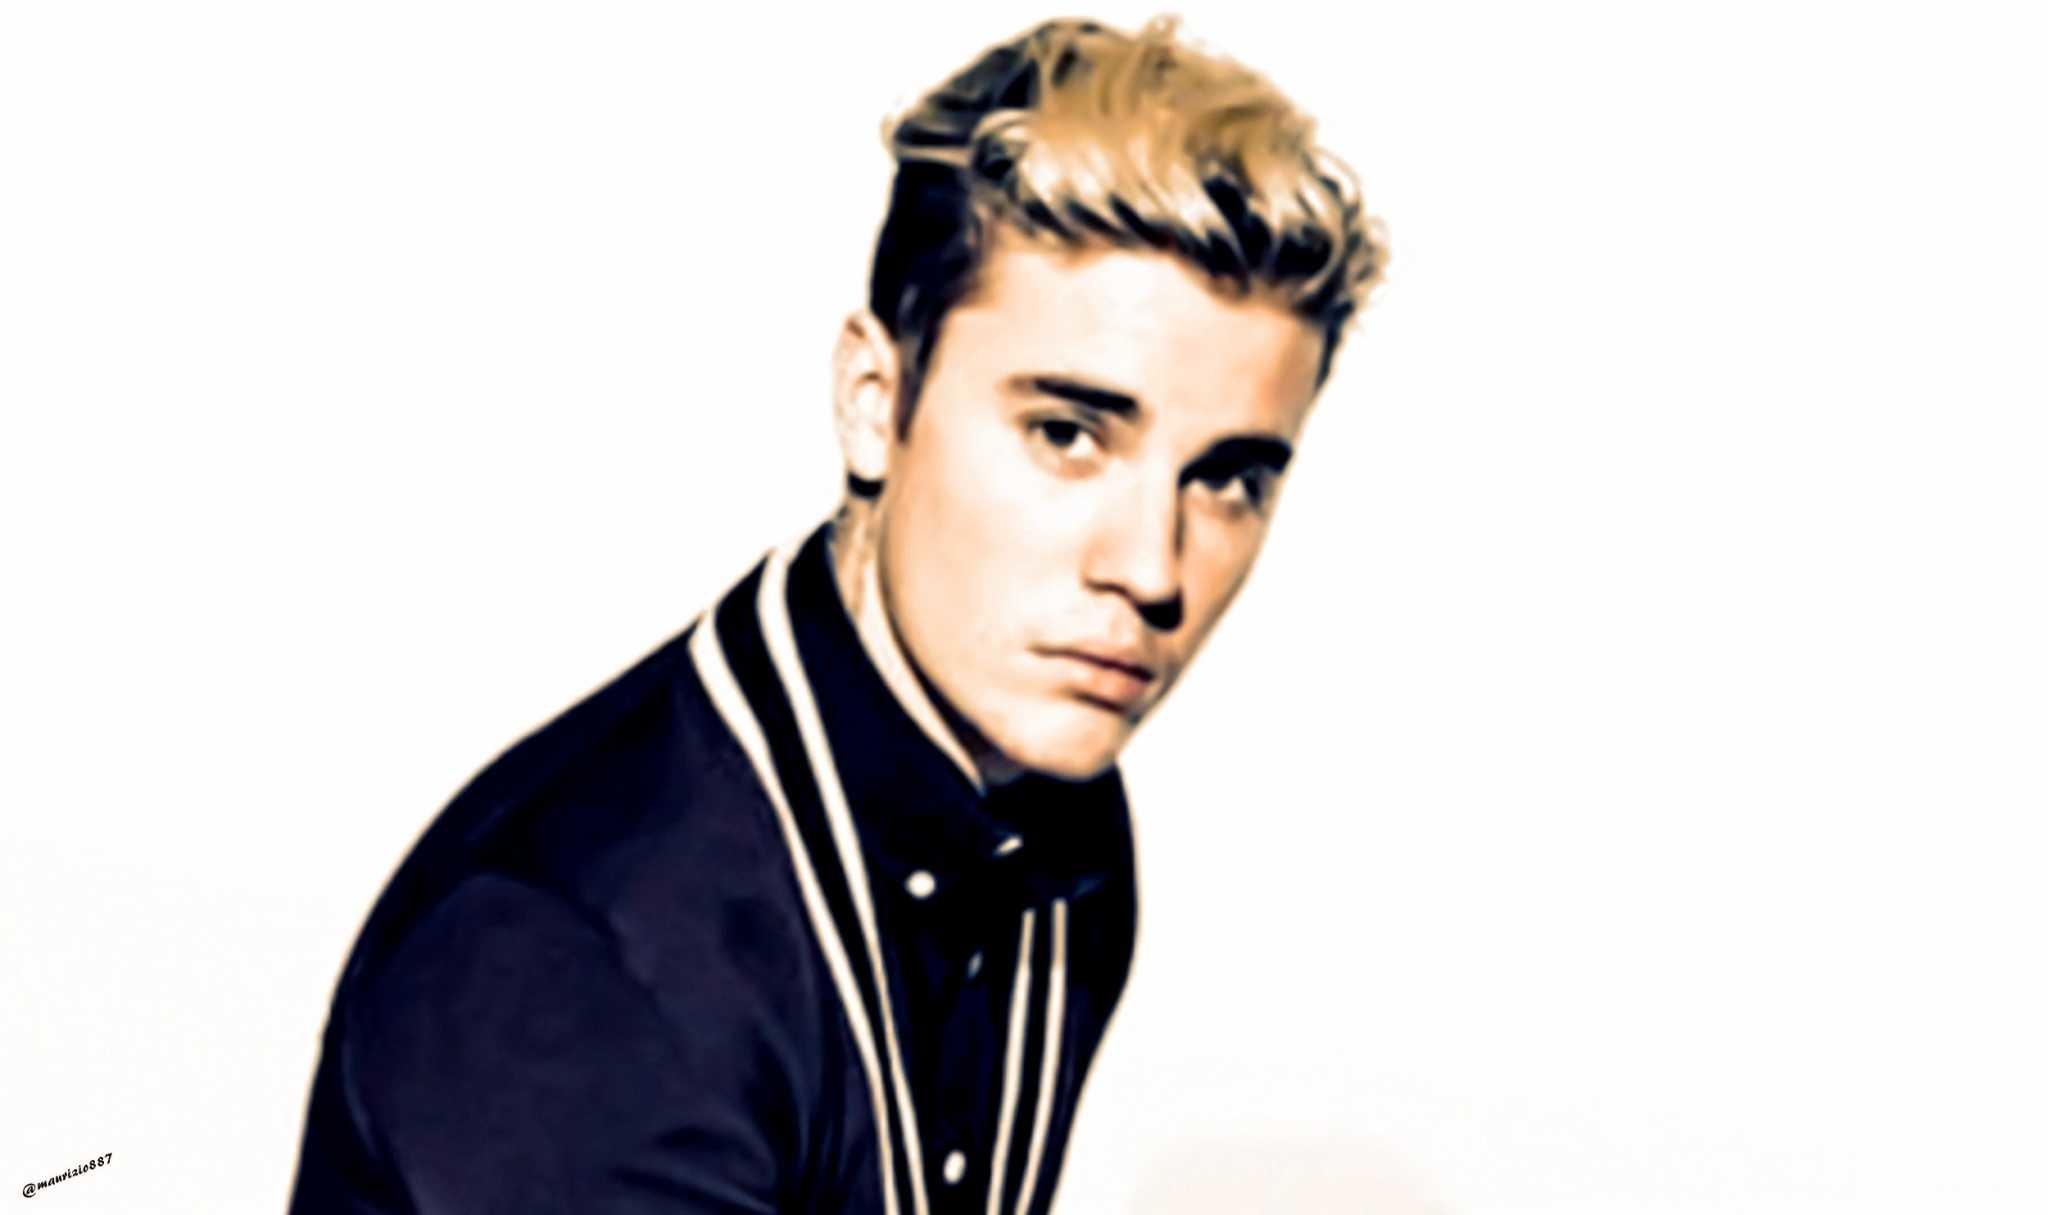 Justin Bieber Wallpaper Desktop background picture